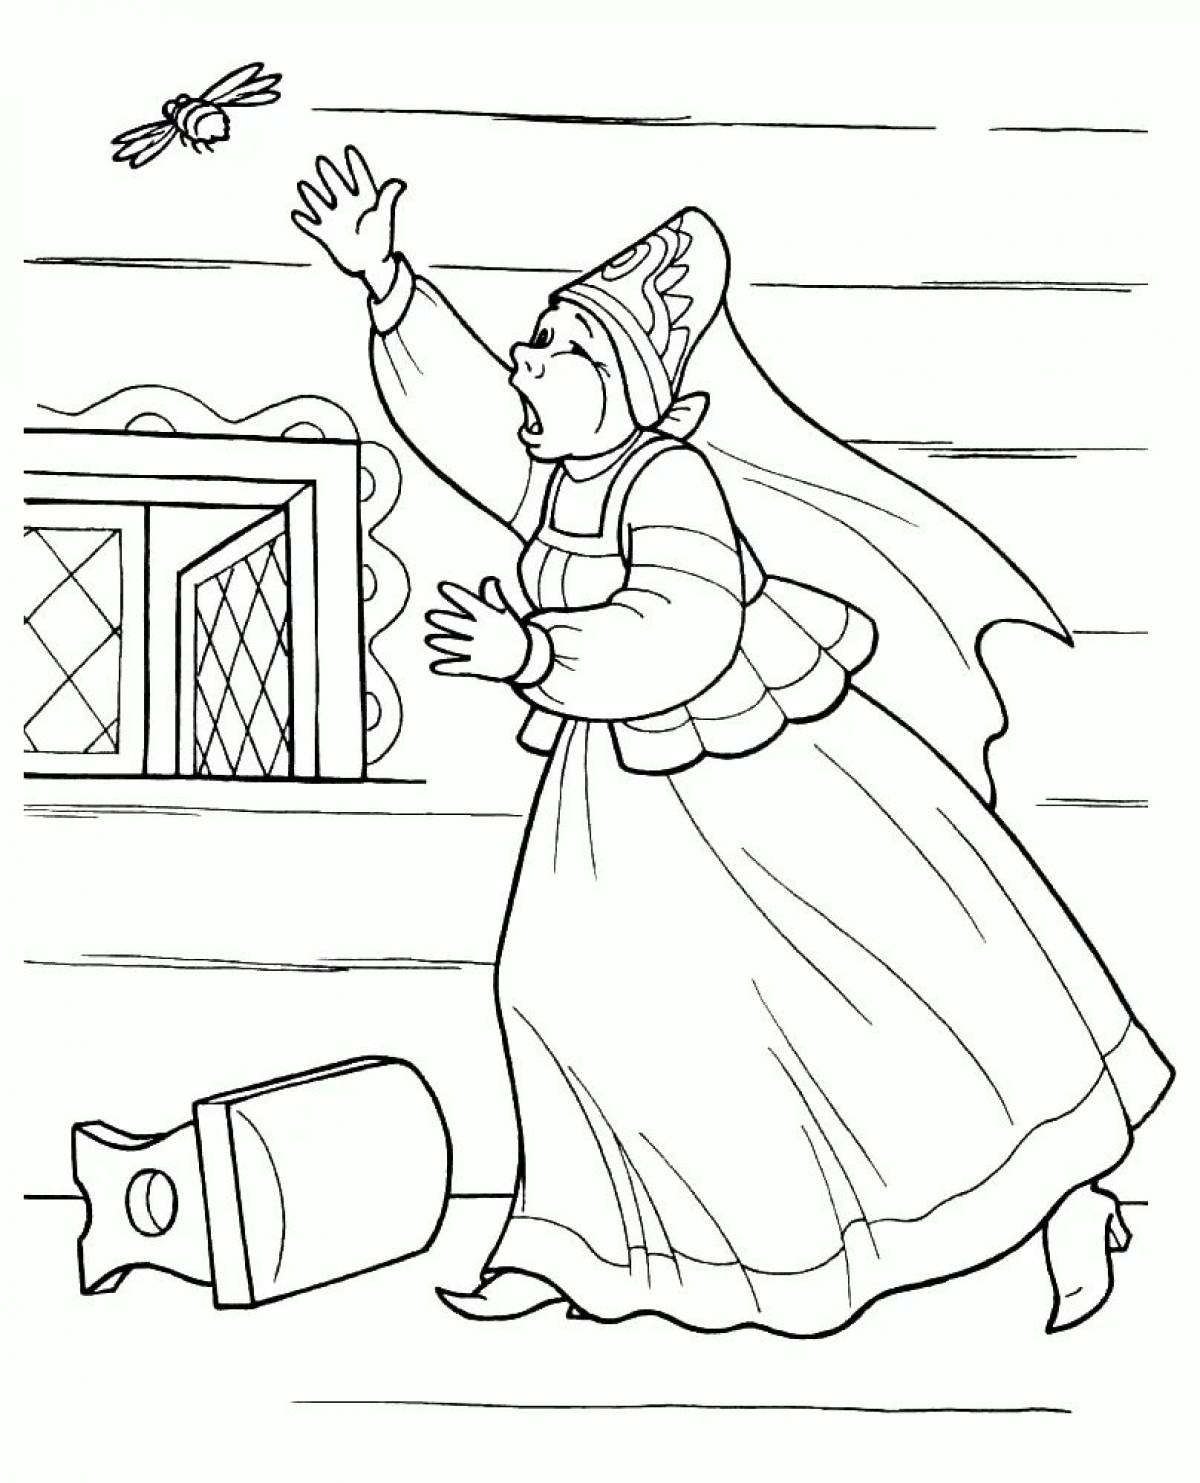 Illustration for the tale of Tsar Saltan Grade 3 #4